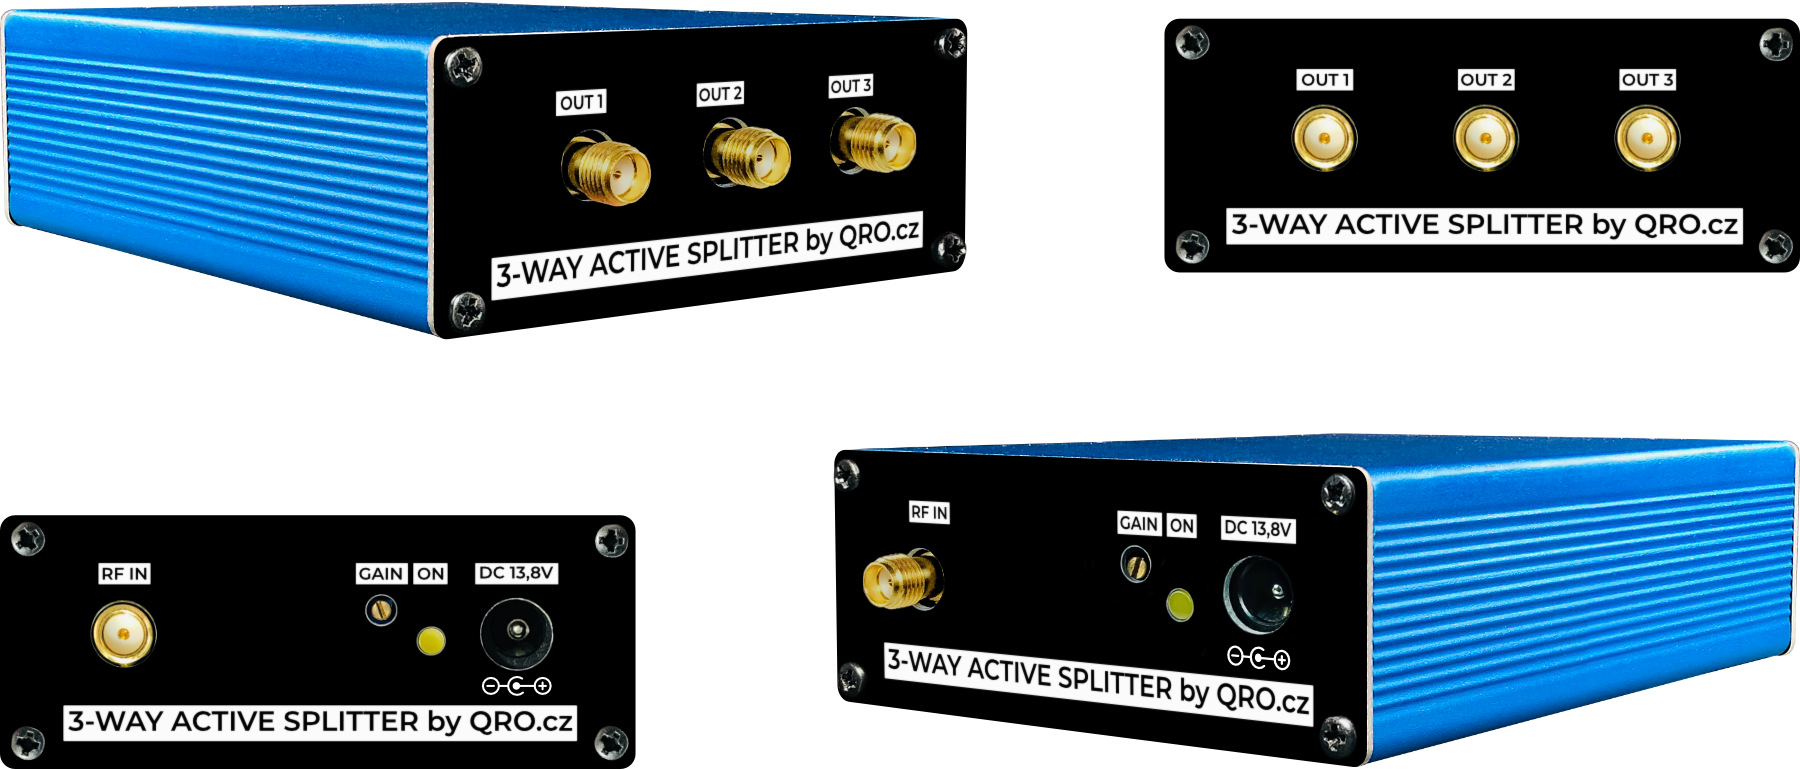 3way active splitter assembled in box qro.cz hamparts.shop